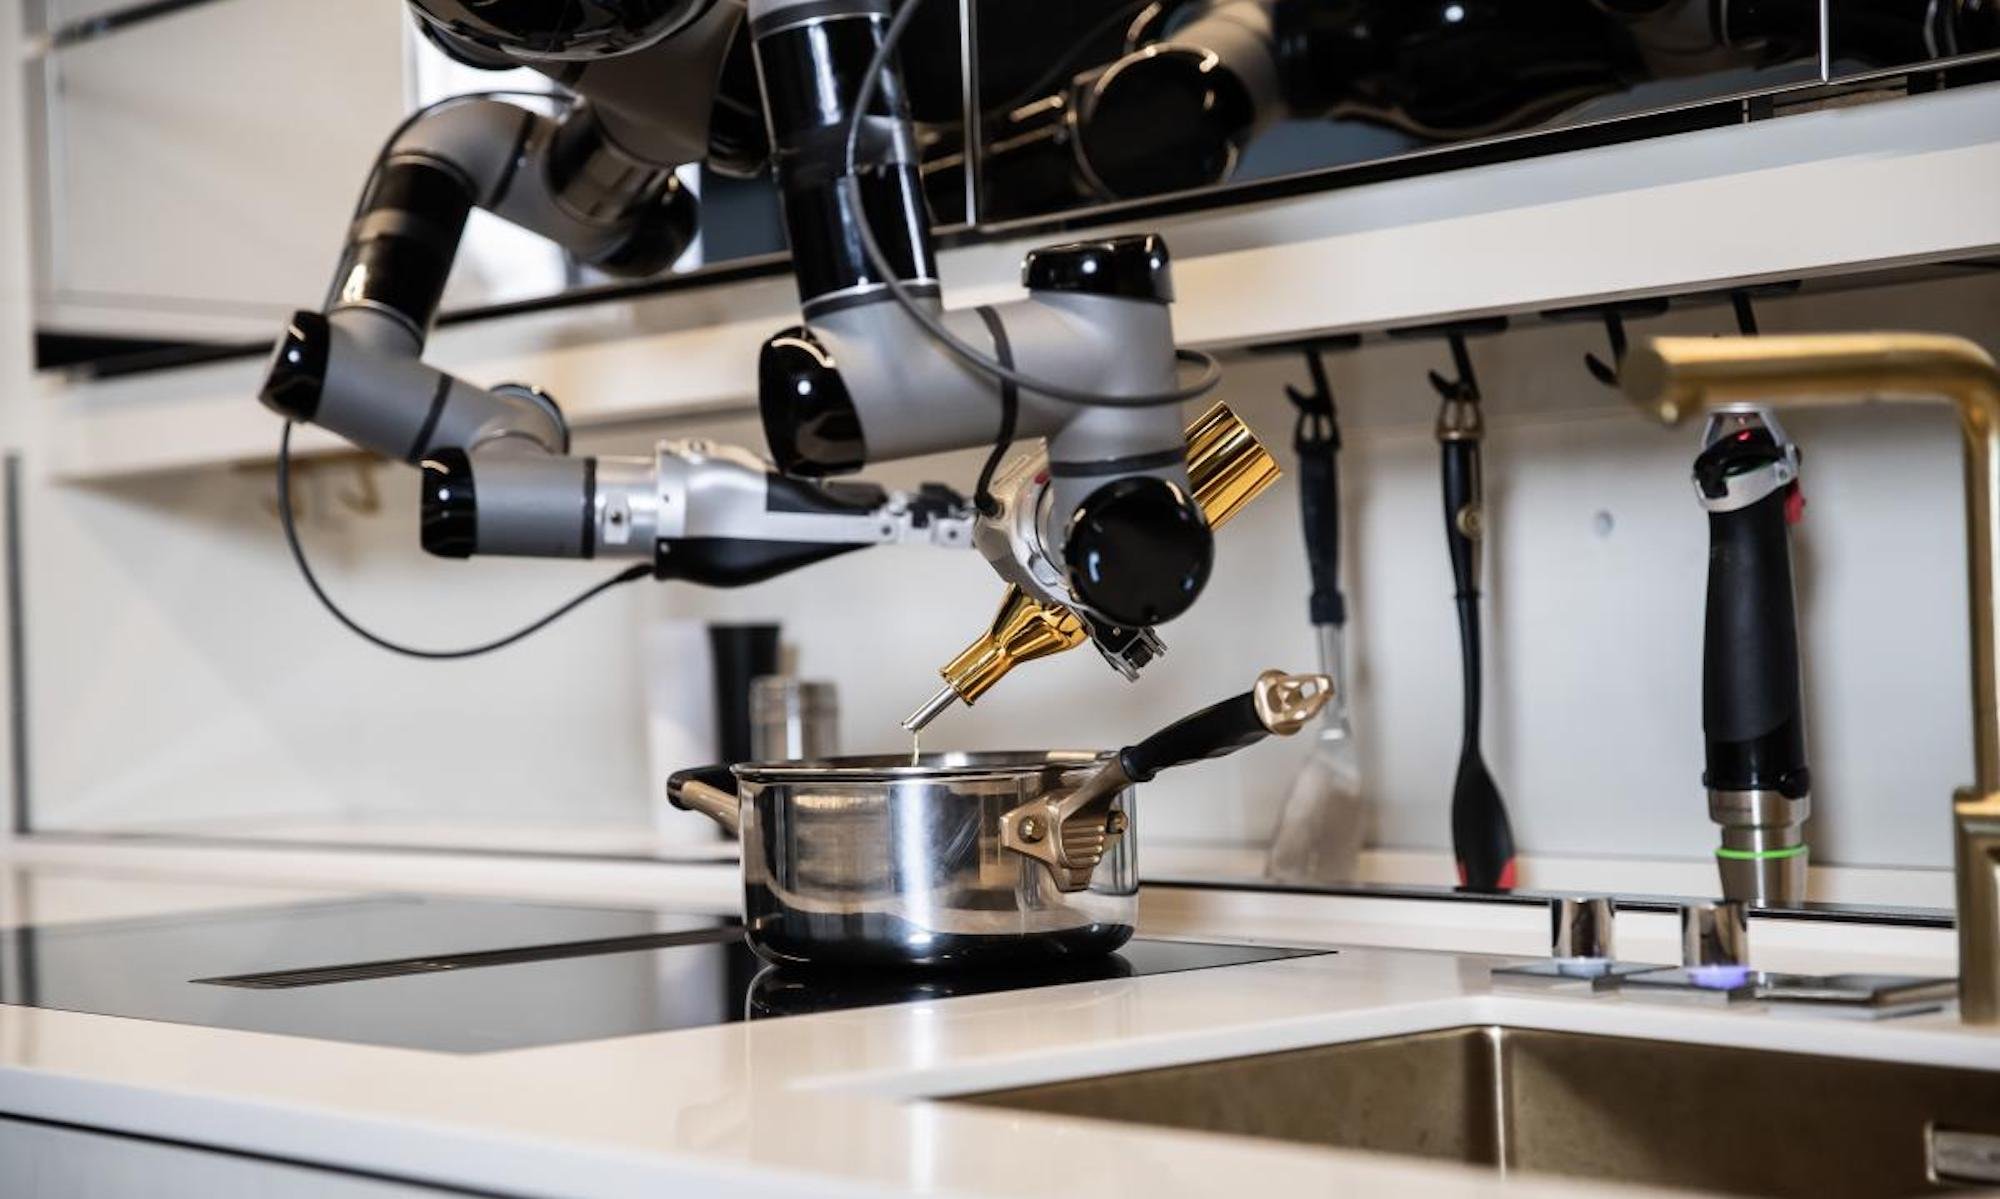 Meet Moley–the futuristic robotics kitchen from CES 2021